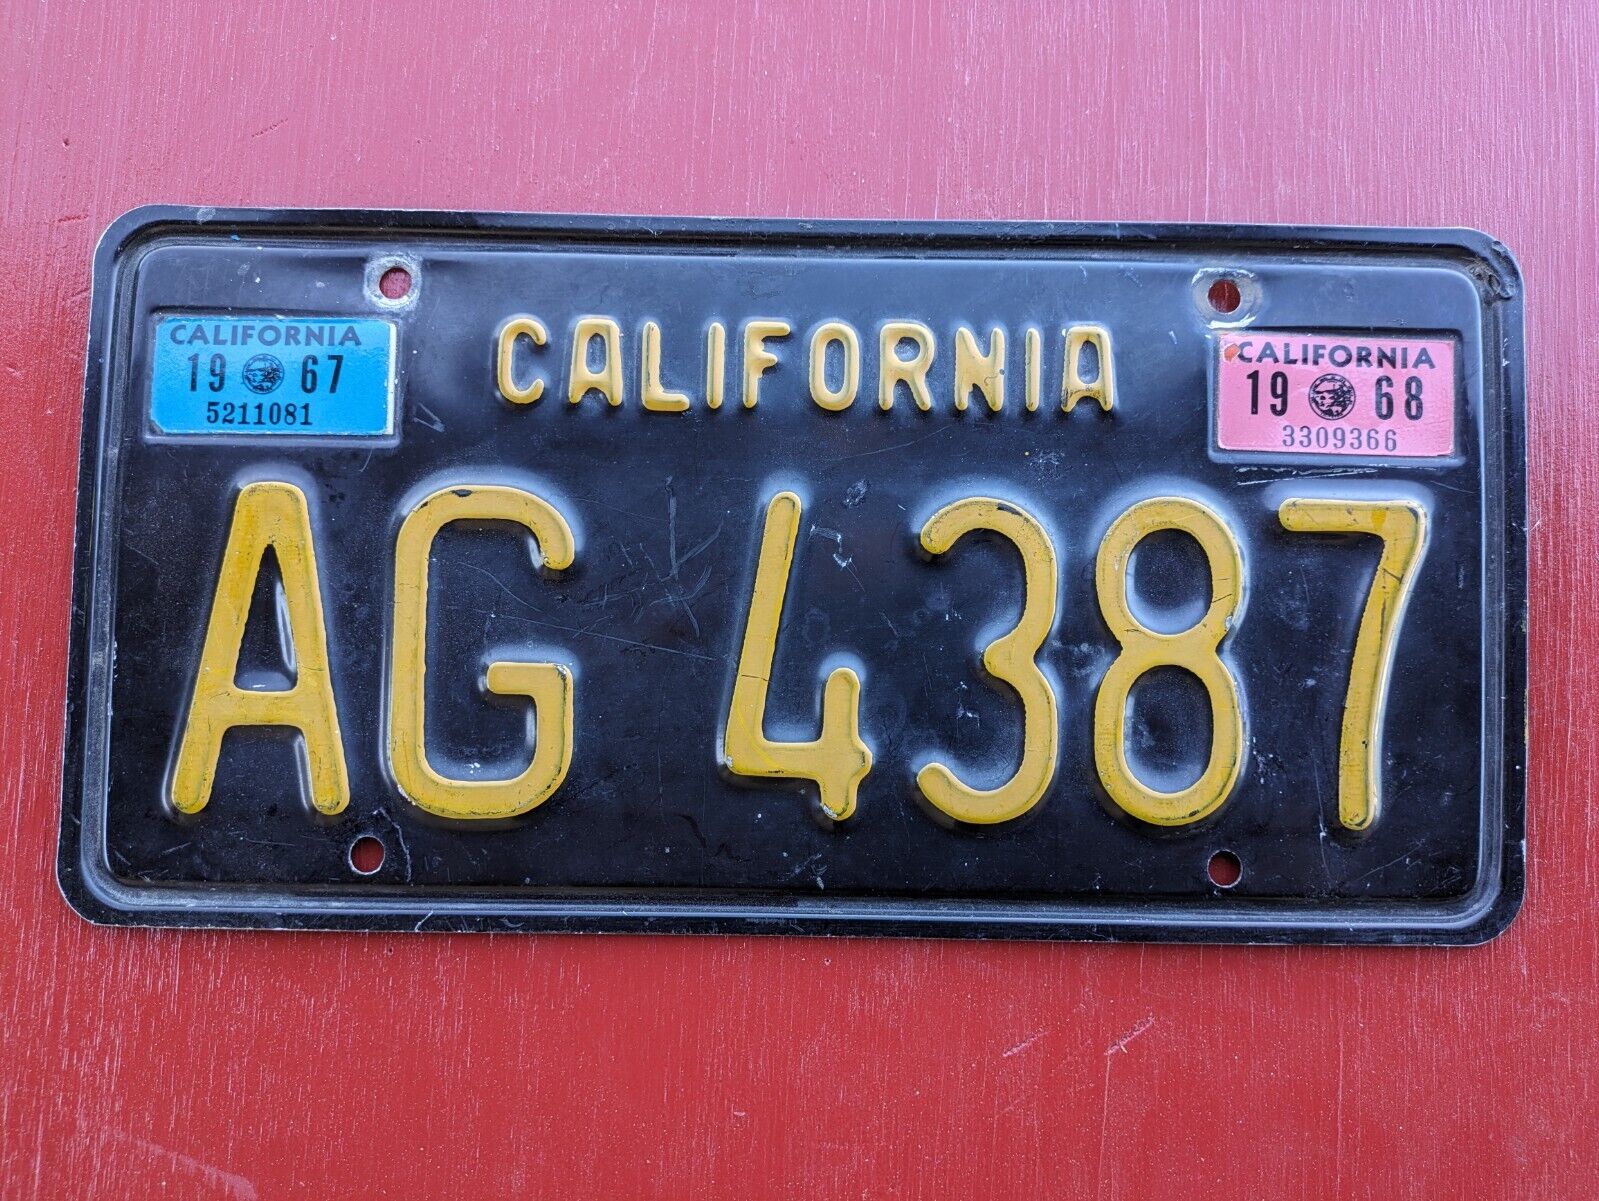 1967/68 California license plate AG 4387